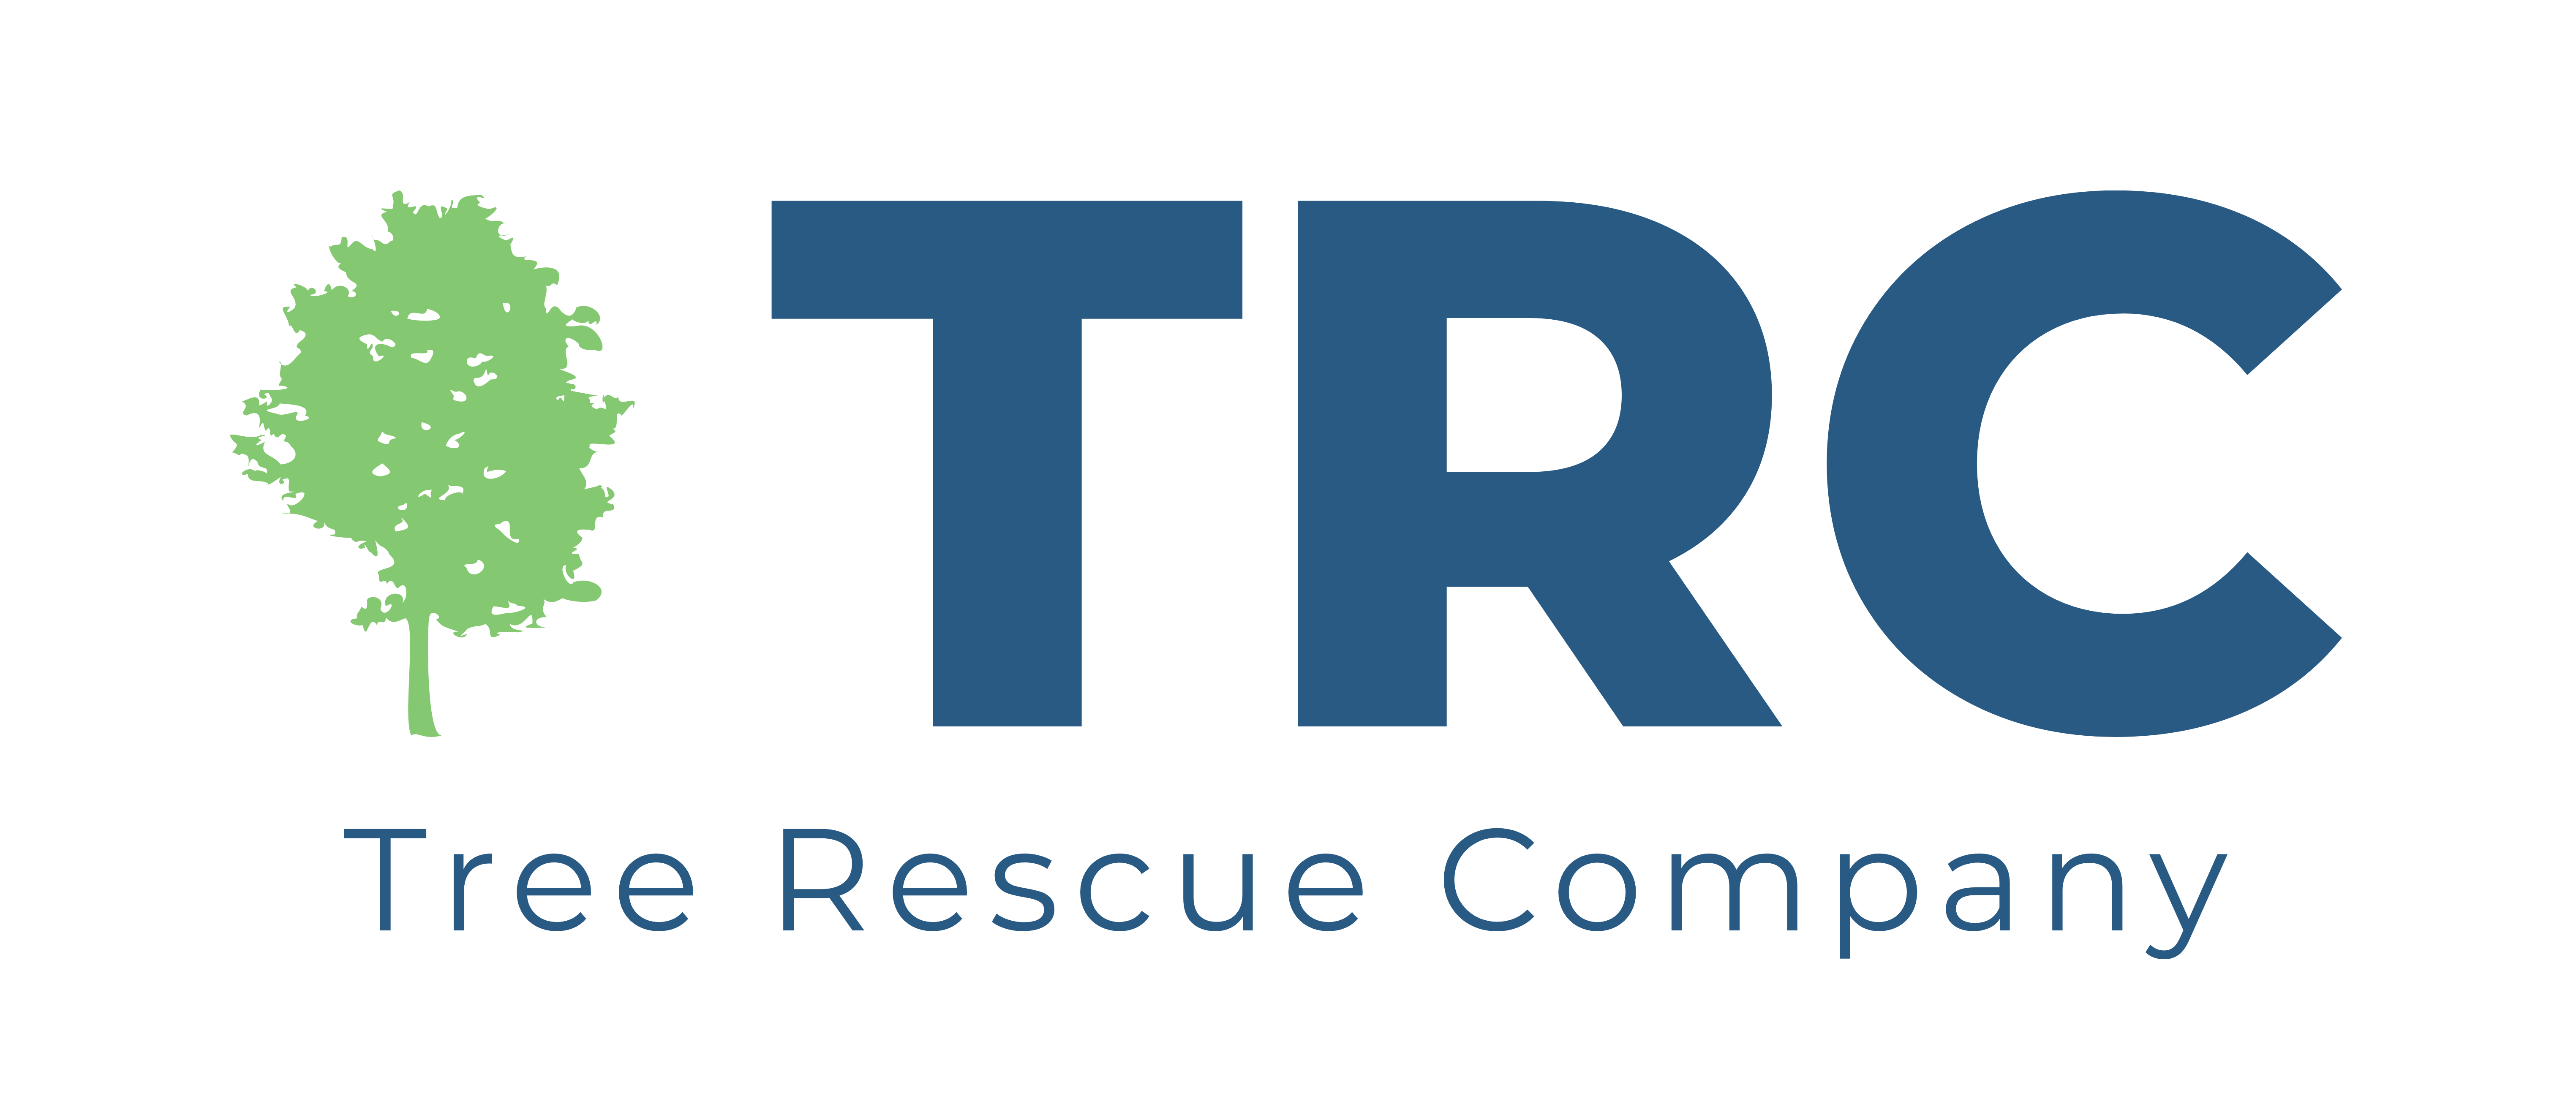 Tree Rescue Company